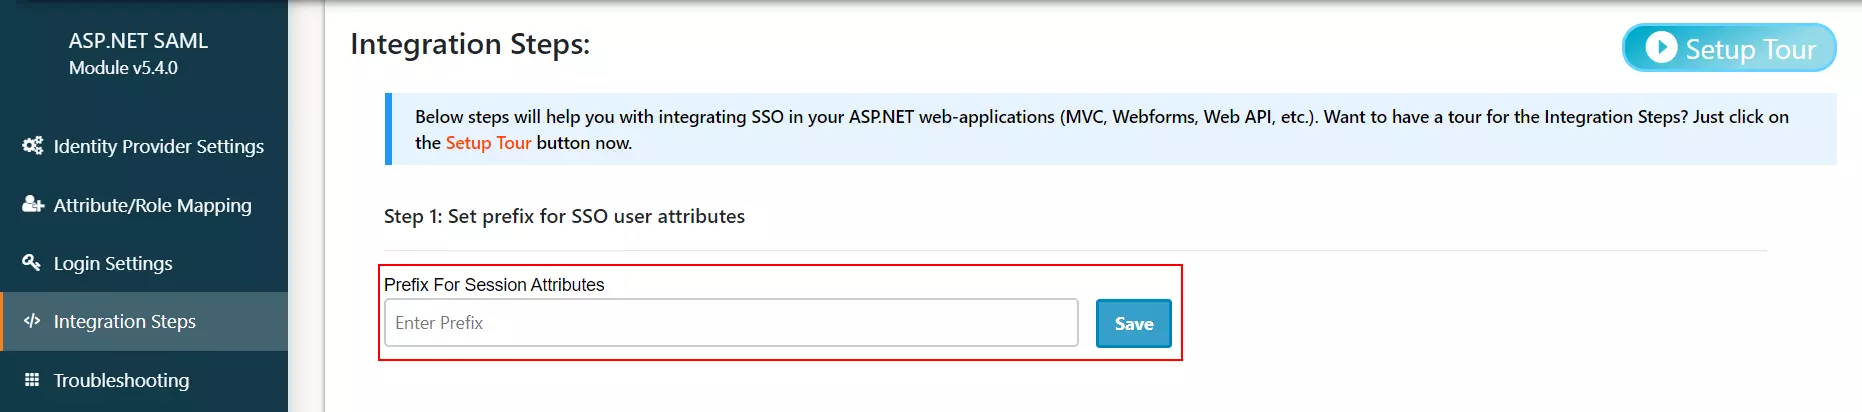 ASP.NET SAML Single Sign-On (SSO) using Salesforce as IDP - Prefix SSO Attributes